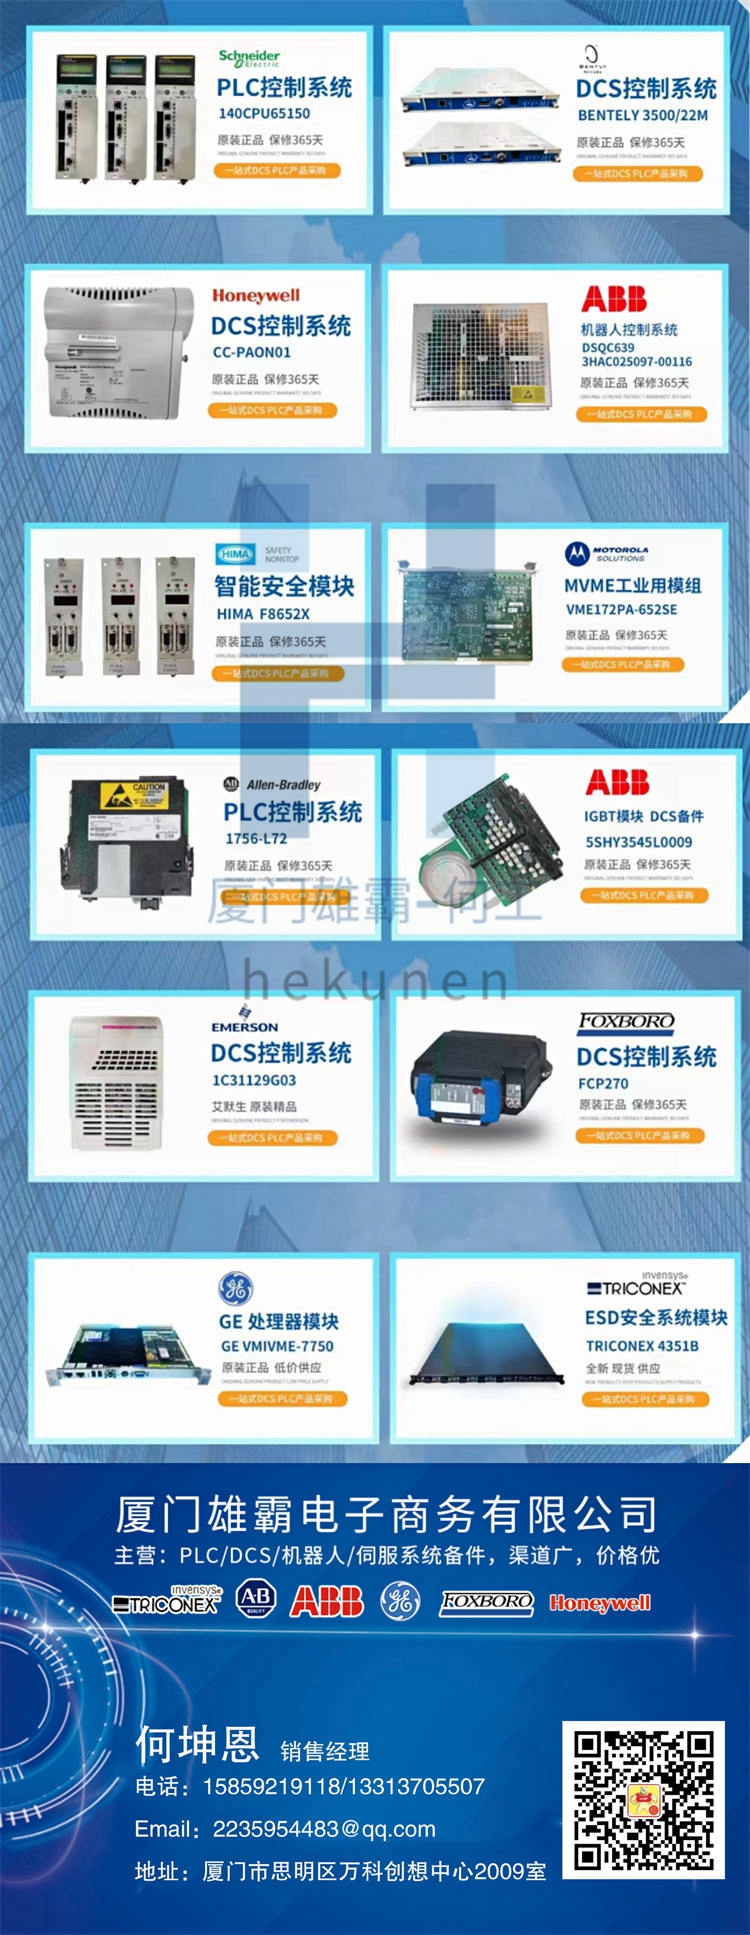 CI855K01 3BSE018106R1 PLC控制器ABB 输入输出模块-备件销售 